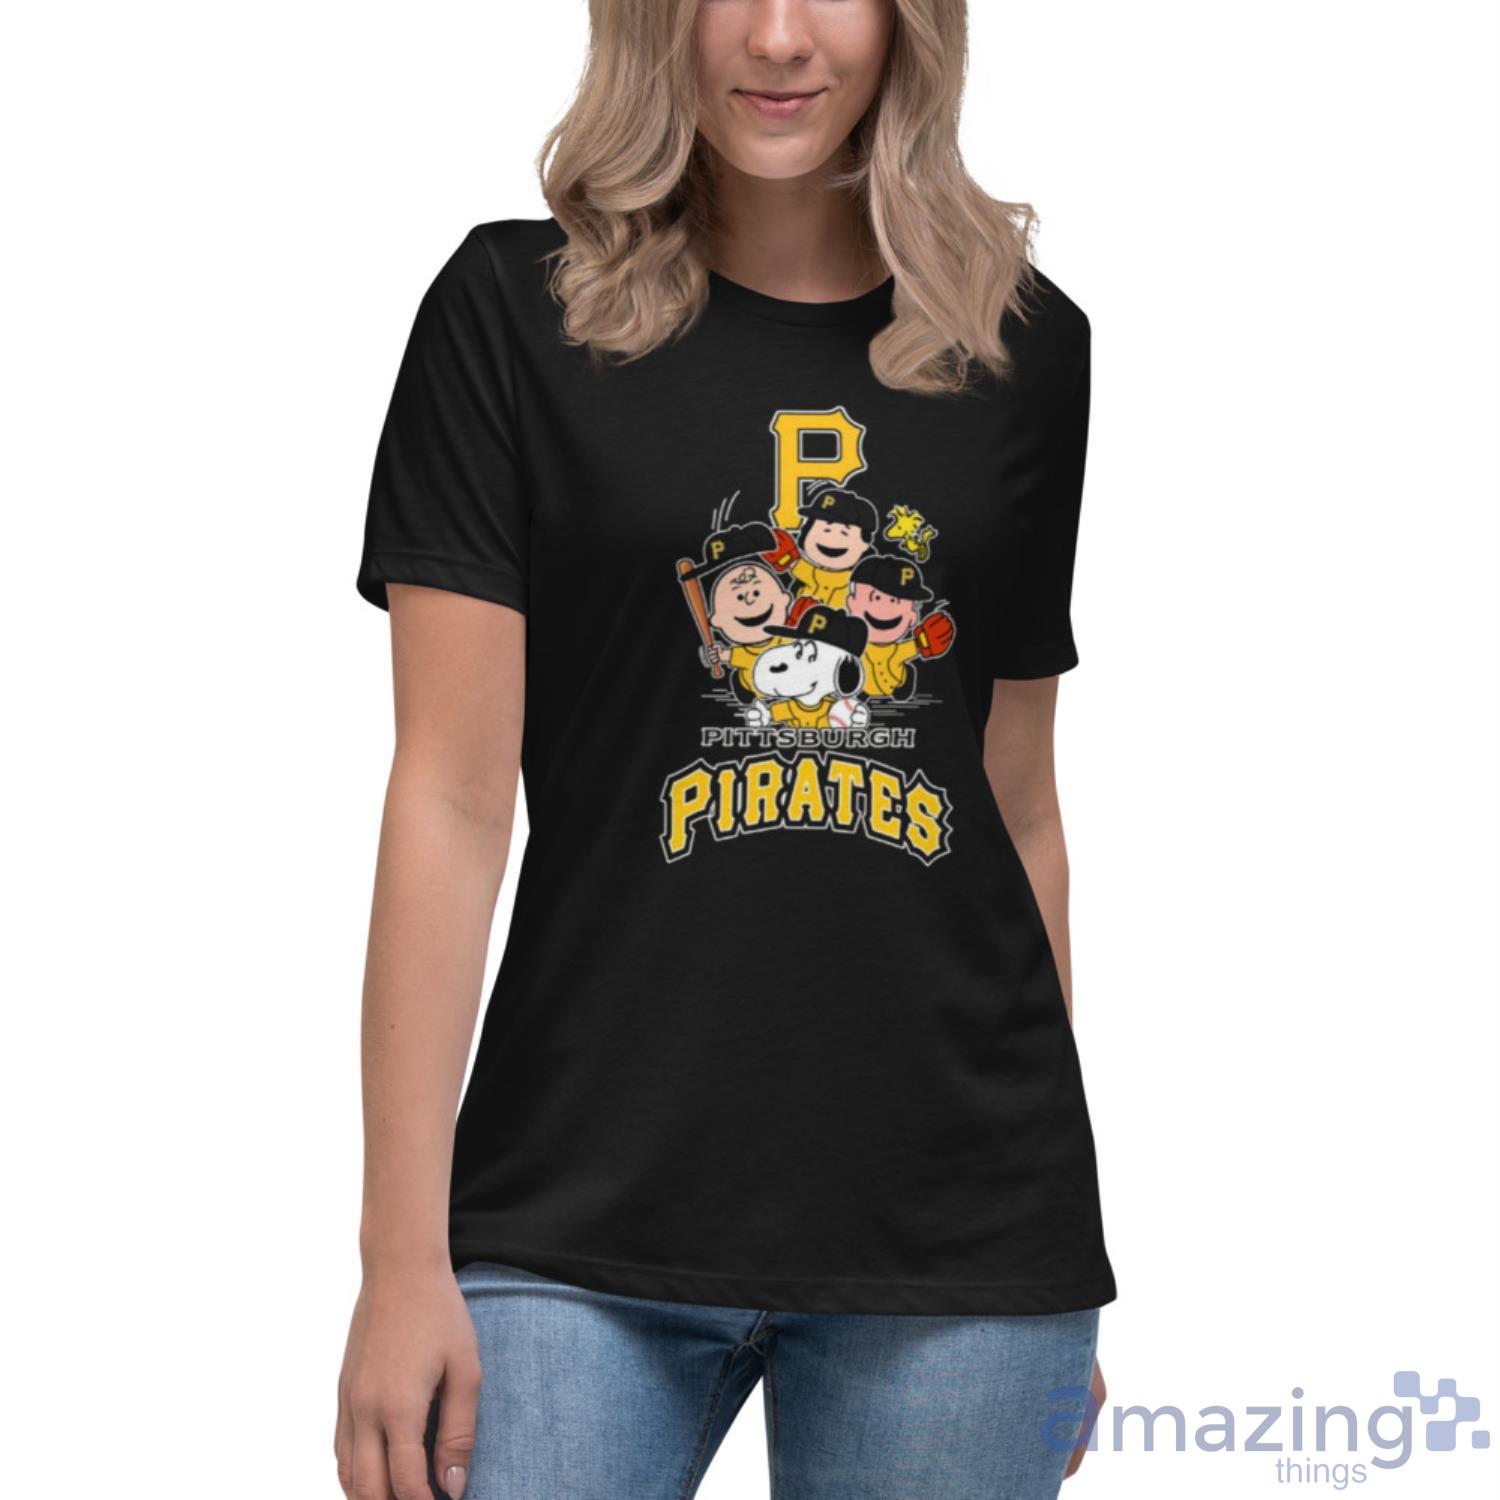 Pittsburgh Pirates Stitched Baseball Tee Shirt Women's Small / White